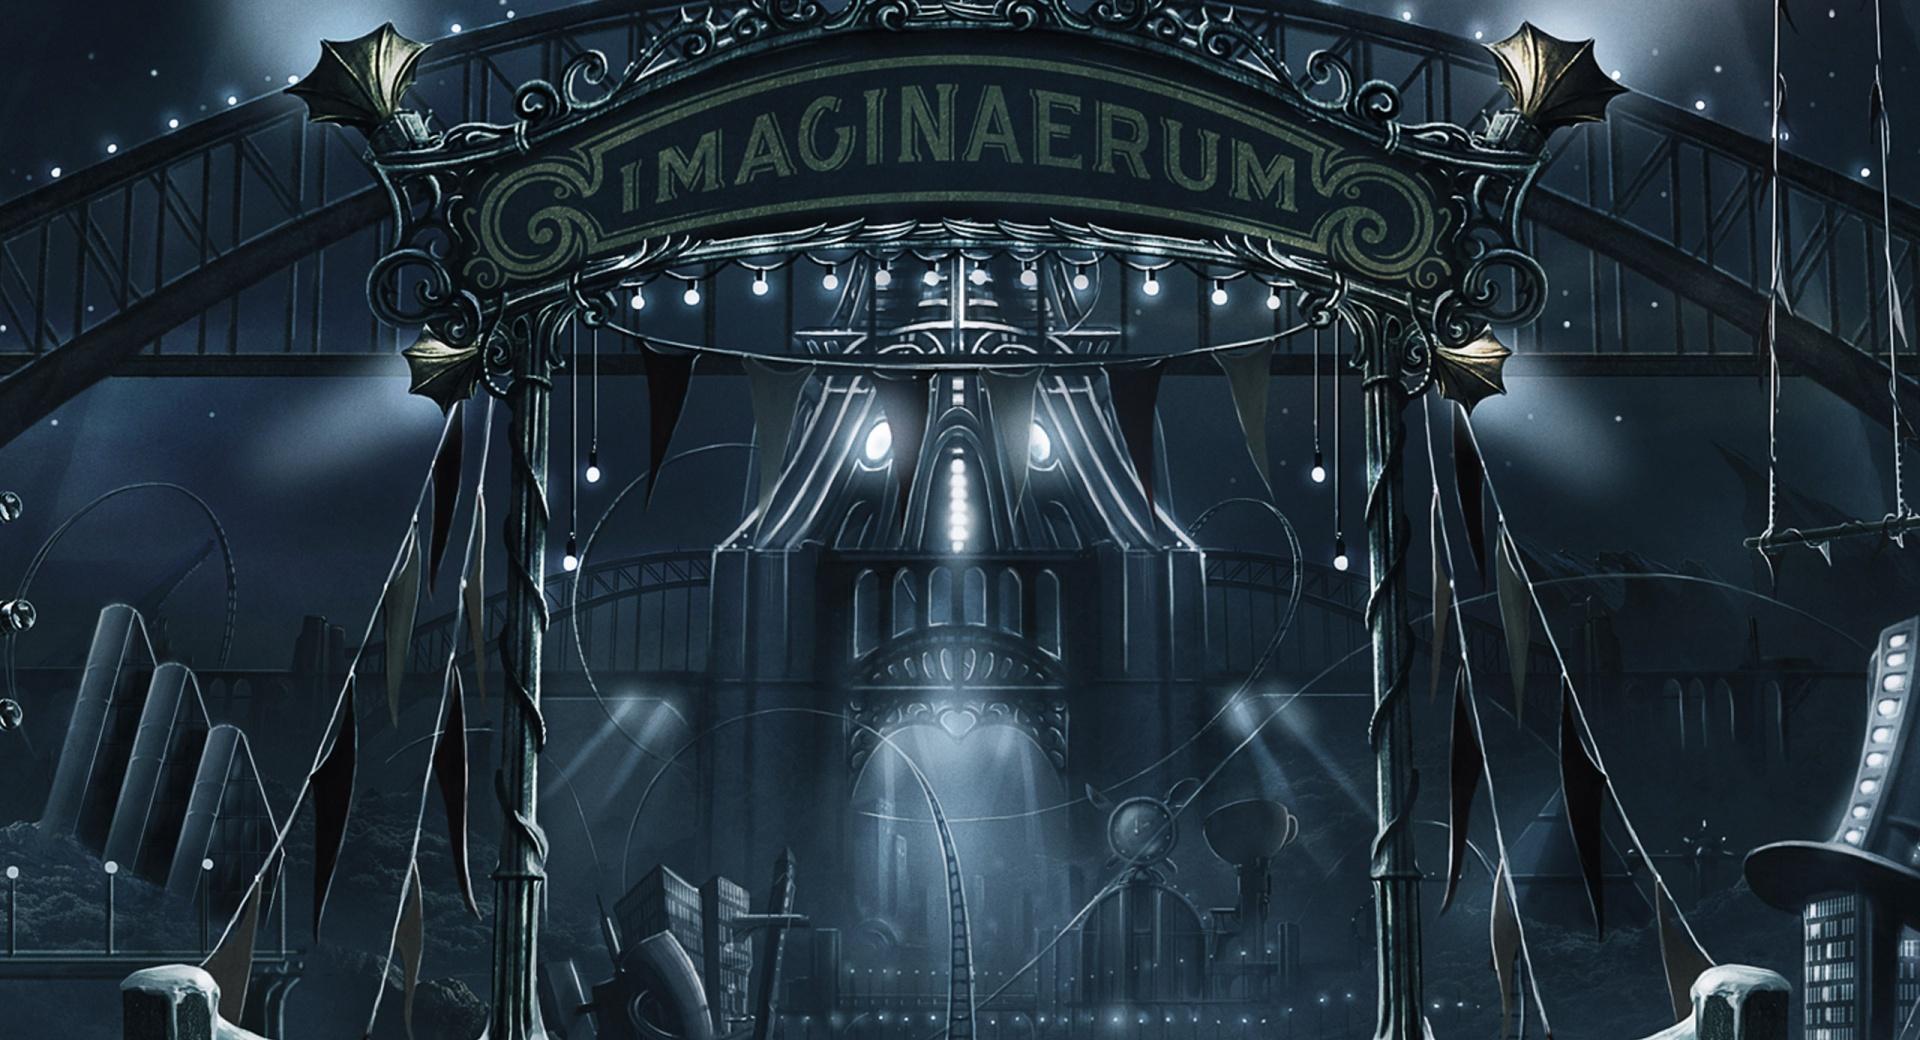 Imaginaerum - Nightwish at 1600 x 1200 size wallpapers HD quality